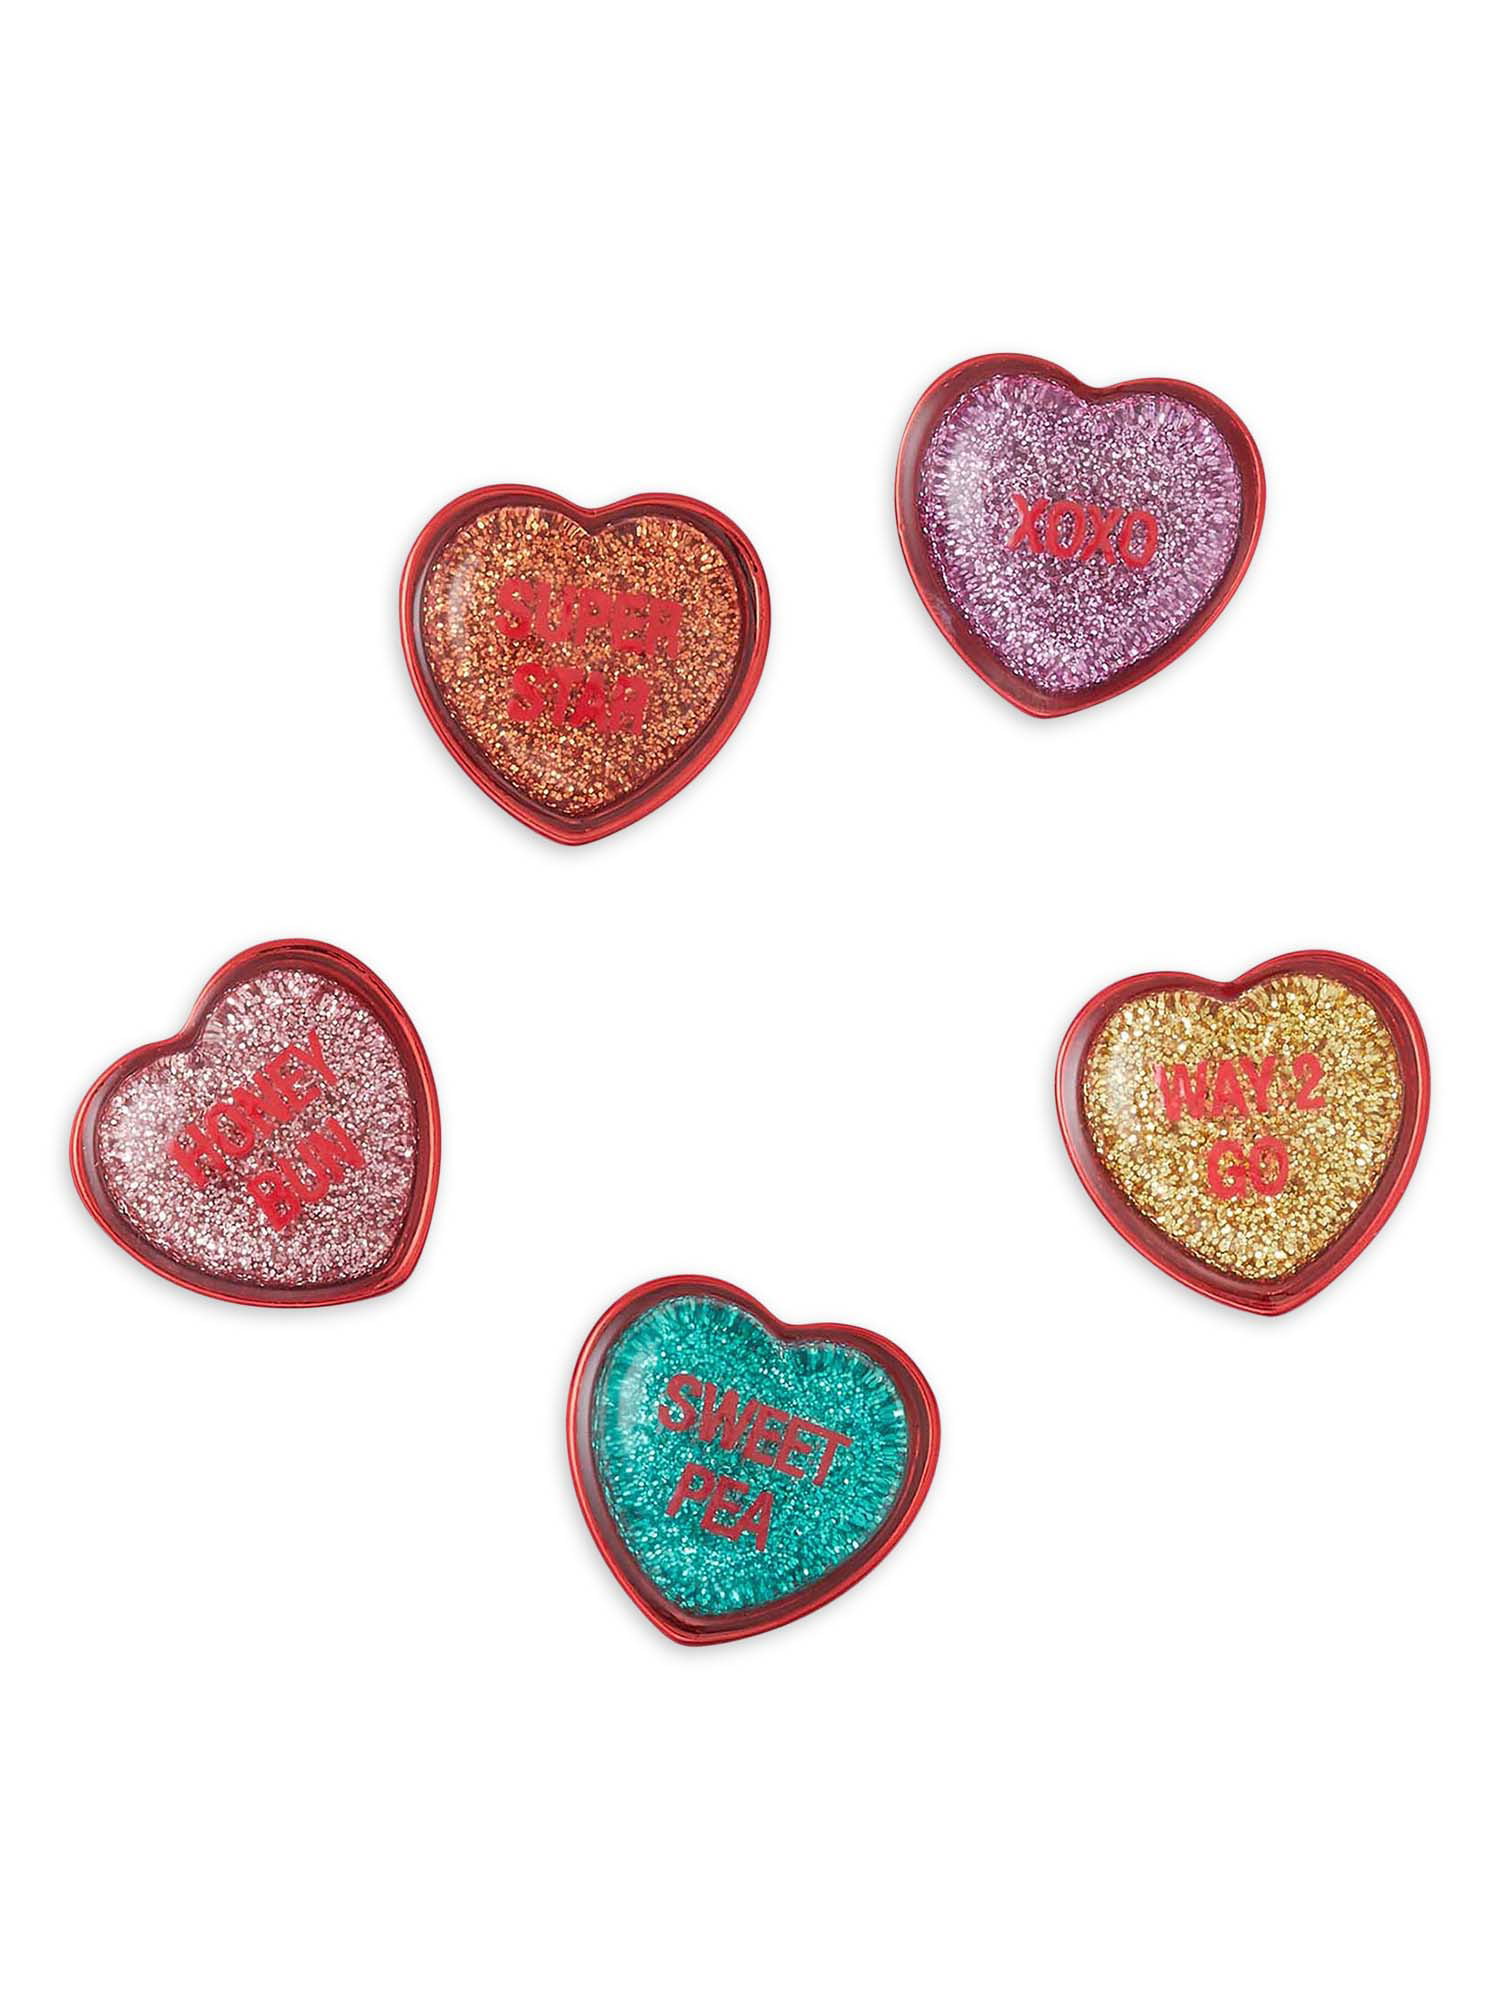 SWEETHEARTS Crocs JIBBITZ CHARMS 5 Pack hearts valentines day